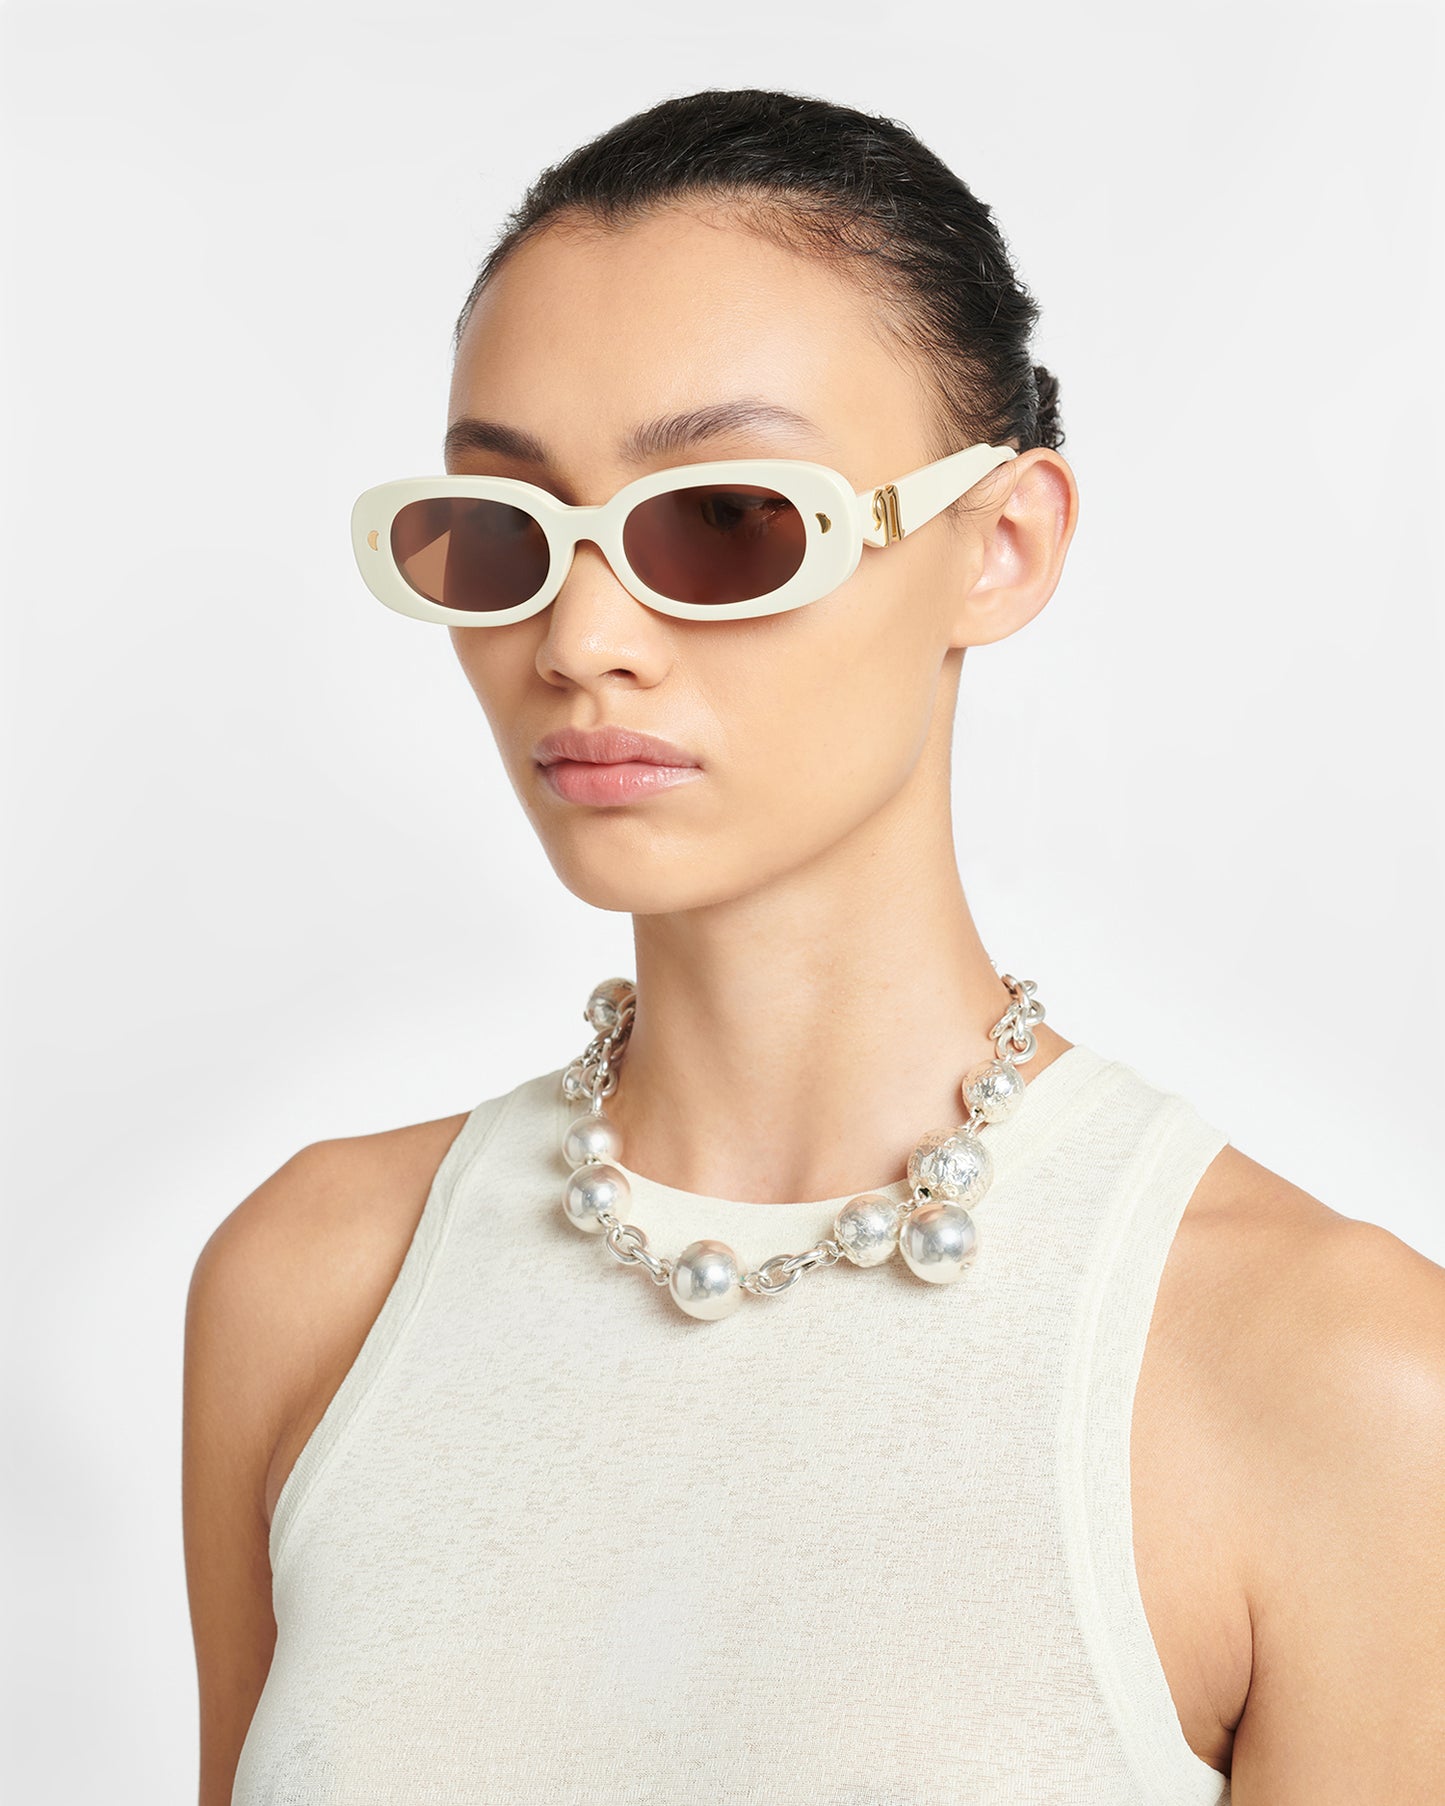 Aliza - Bio-Plastic Oval-Frame Sunglasses - Shell